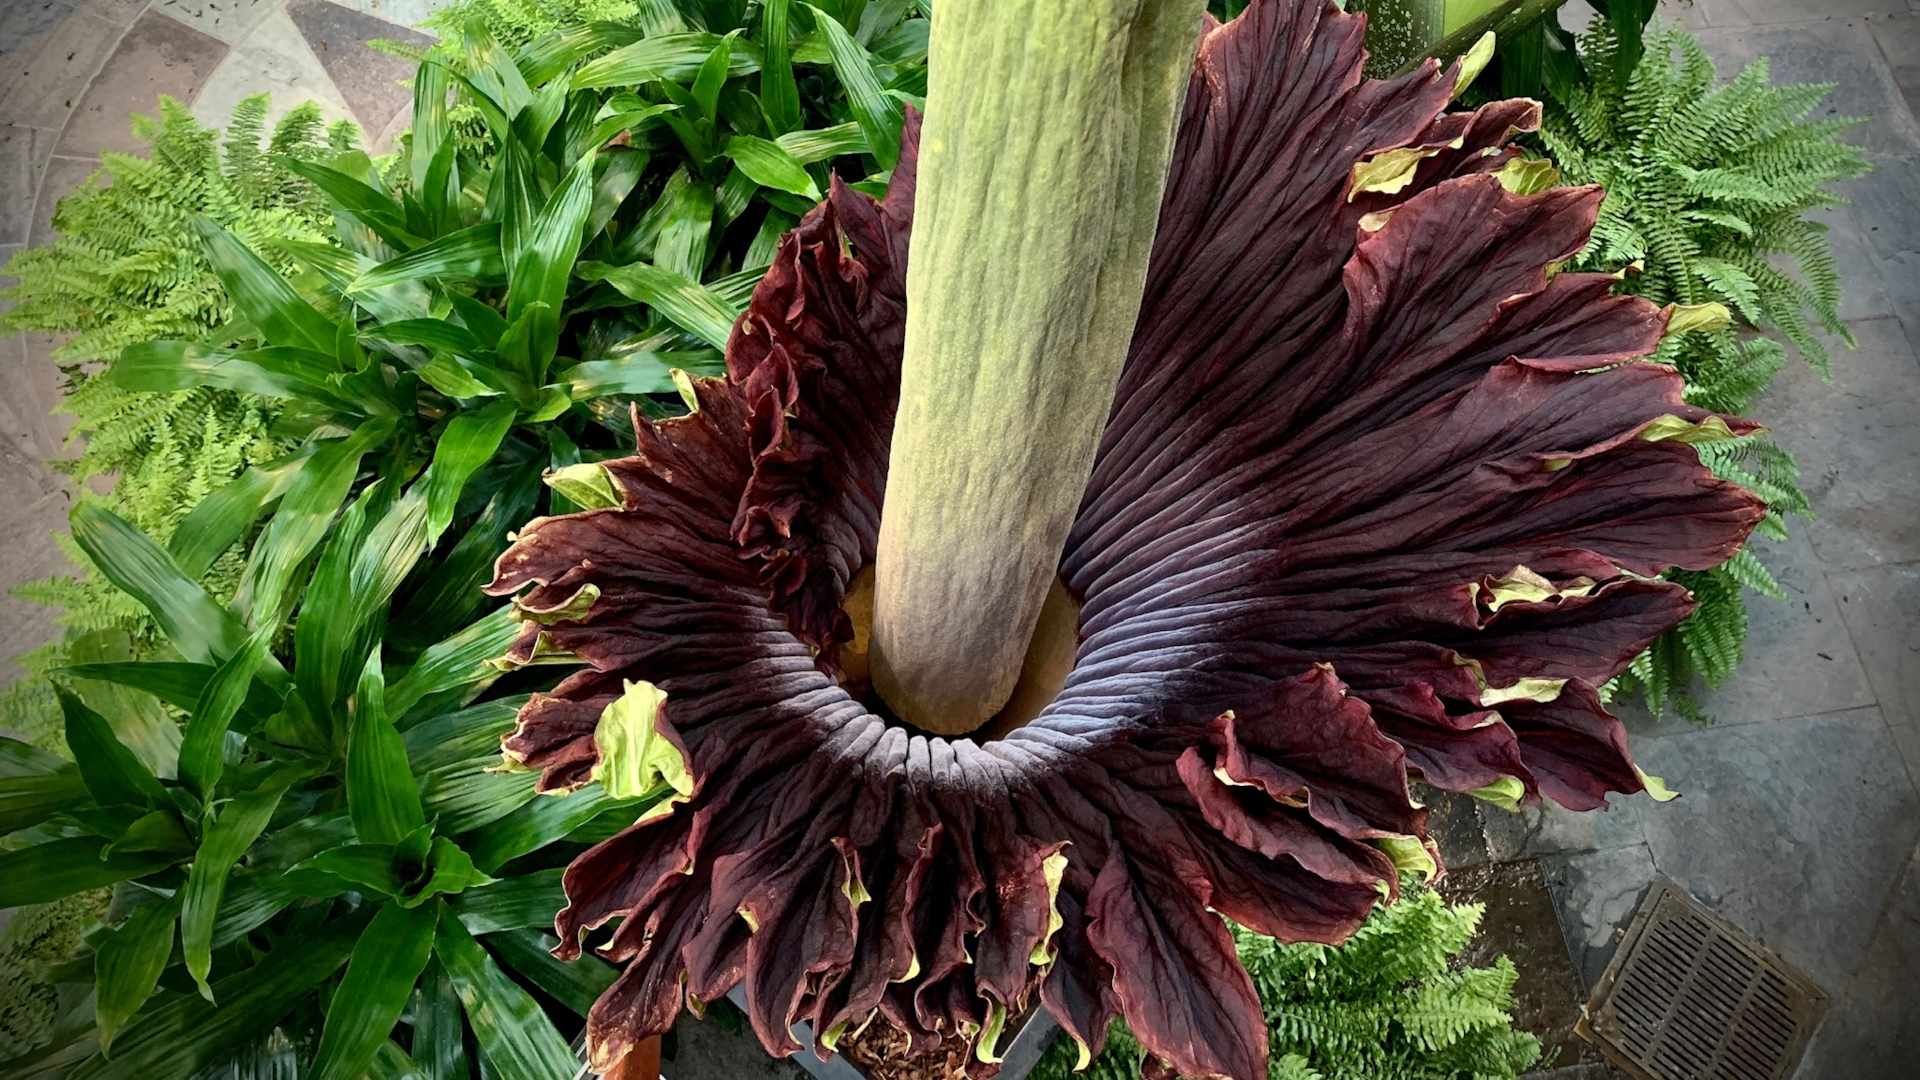 Flower of the Corpse (Amorphophallus titanum)